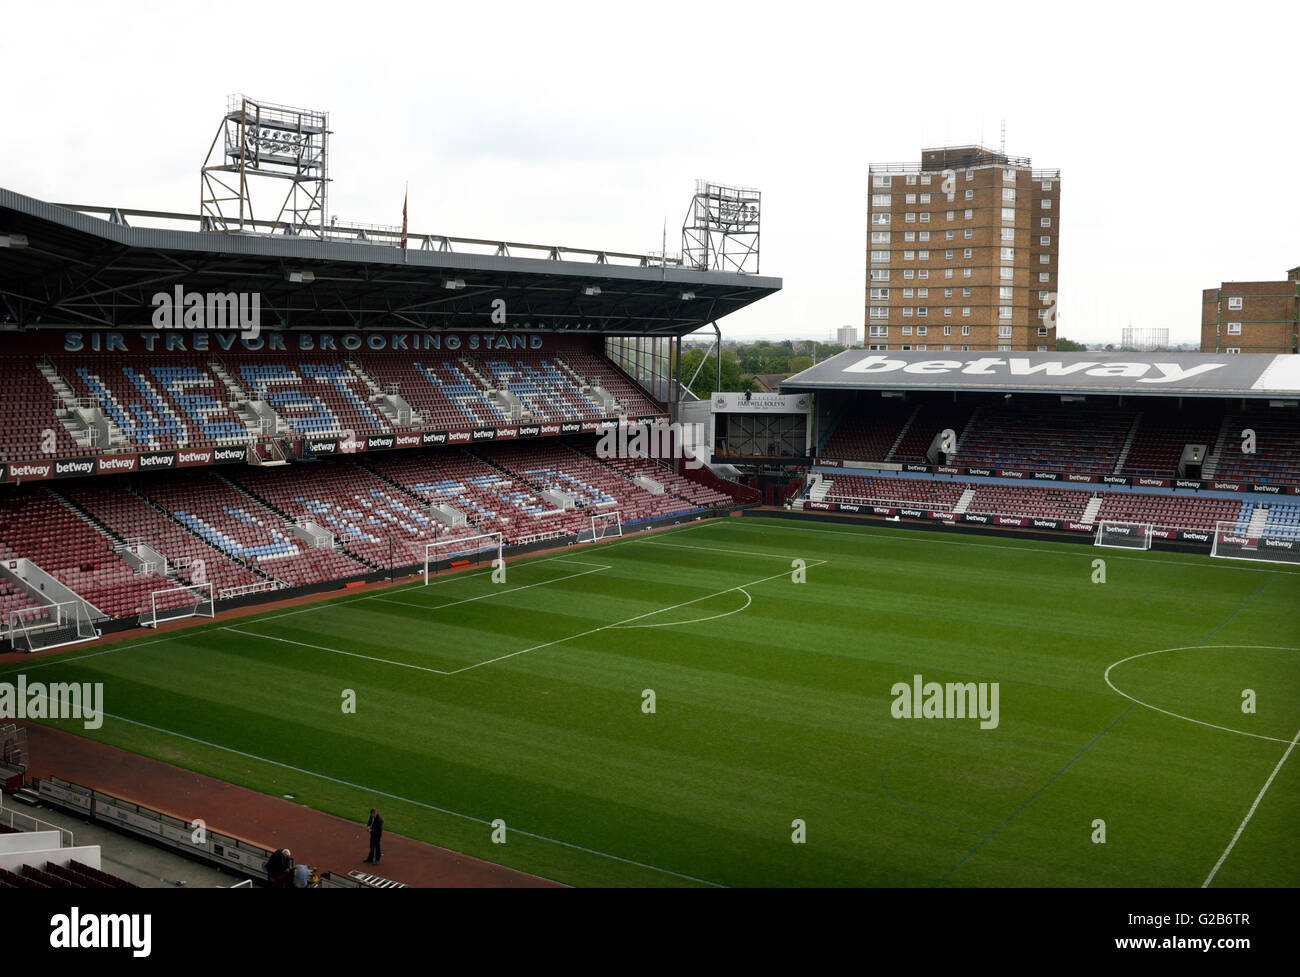 Sir Trevor dulden Stand, Boleyn Ground, Upton Park, West Ham, London Stockfoto